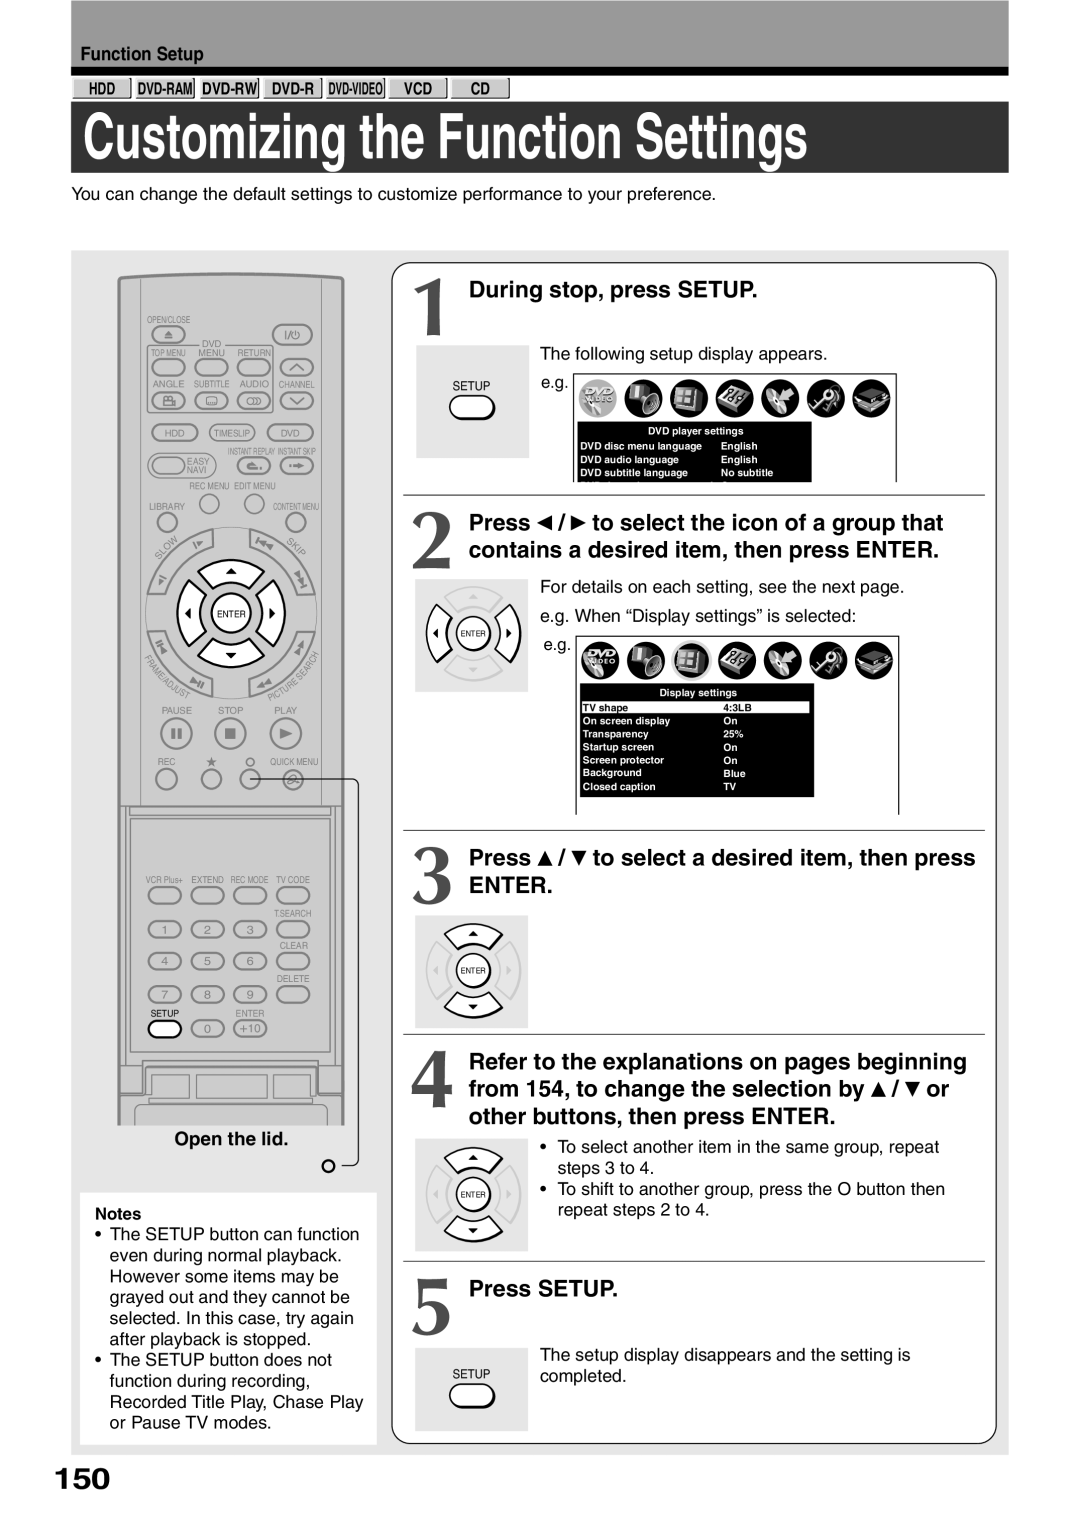 Toshiba RD-XS32SC Customizing the Function Settings, During stop, press SETUP, Press SETUP, Function Setup, Enter 